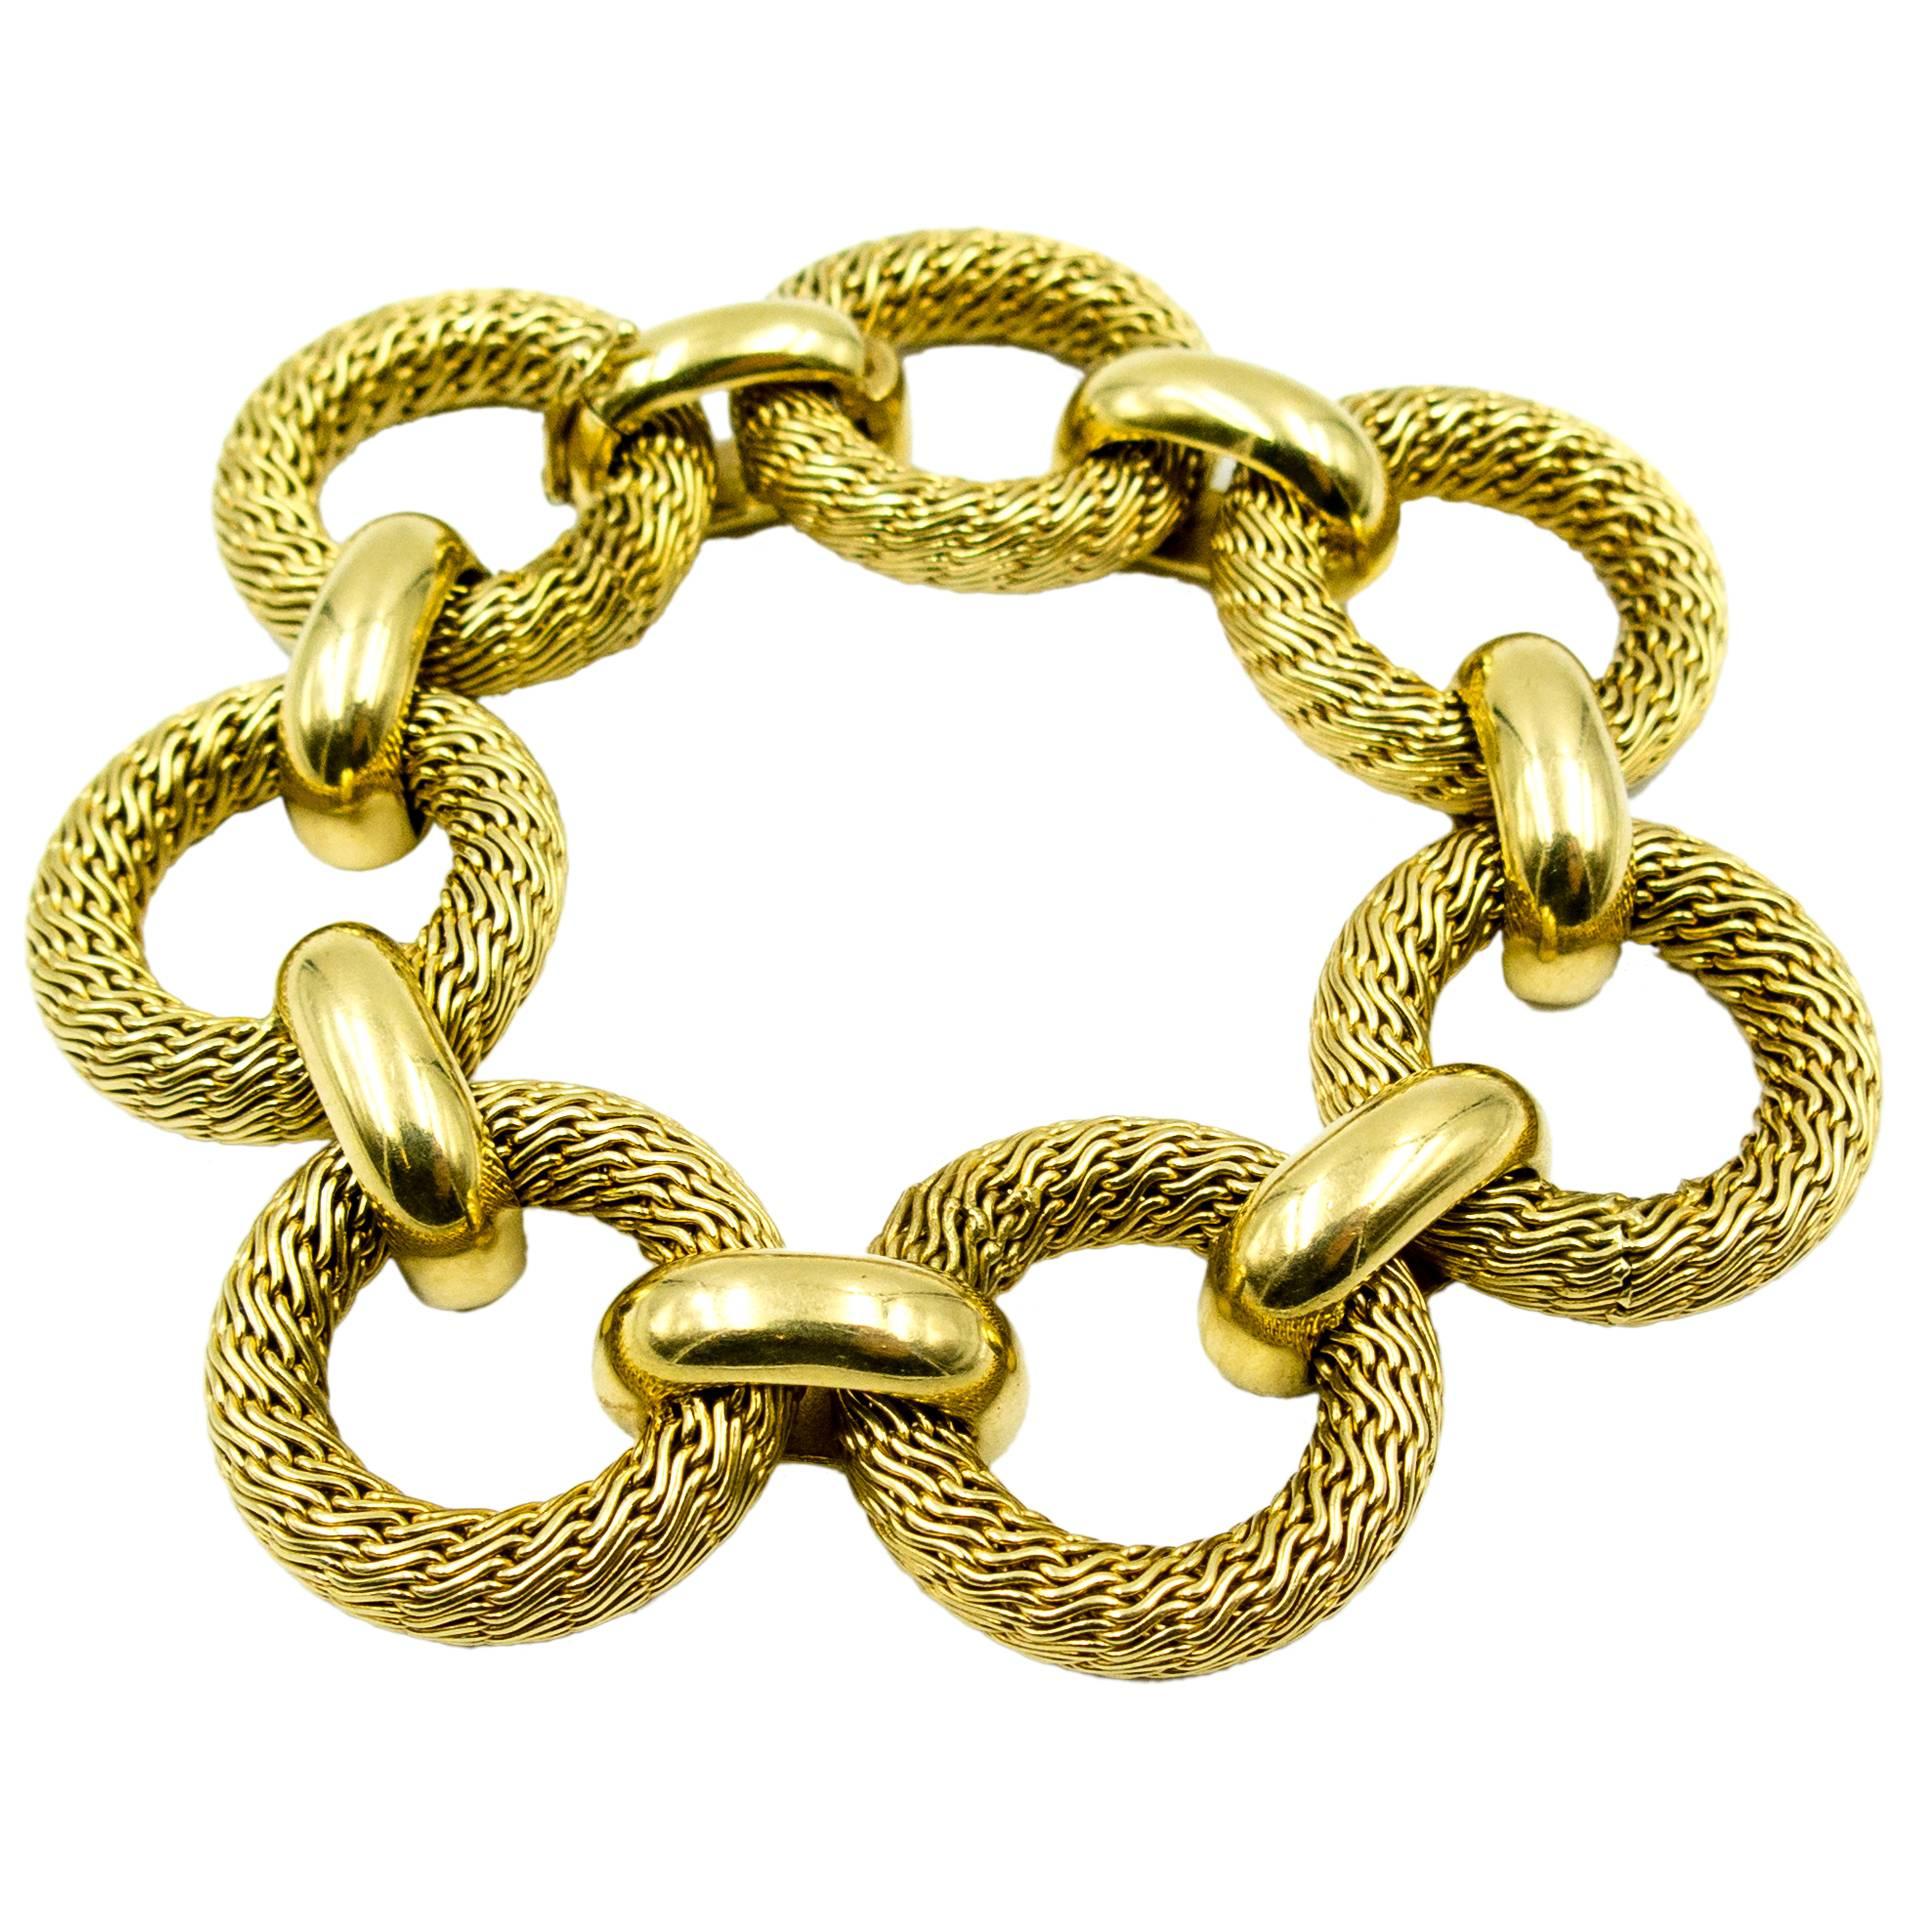 Chic and Impressive Gold Textured Link Bracelet